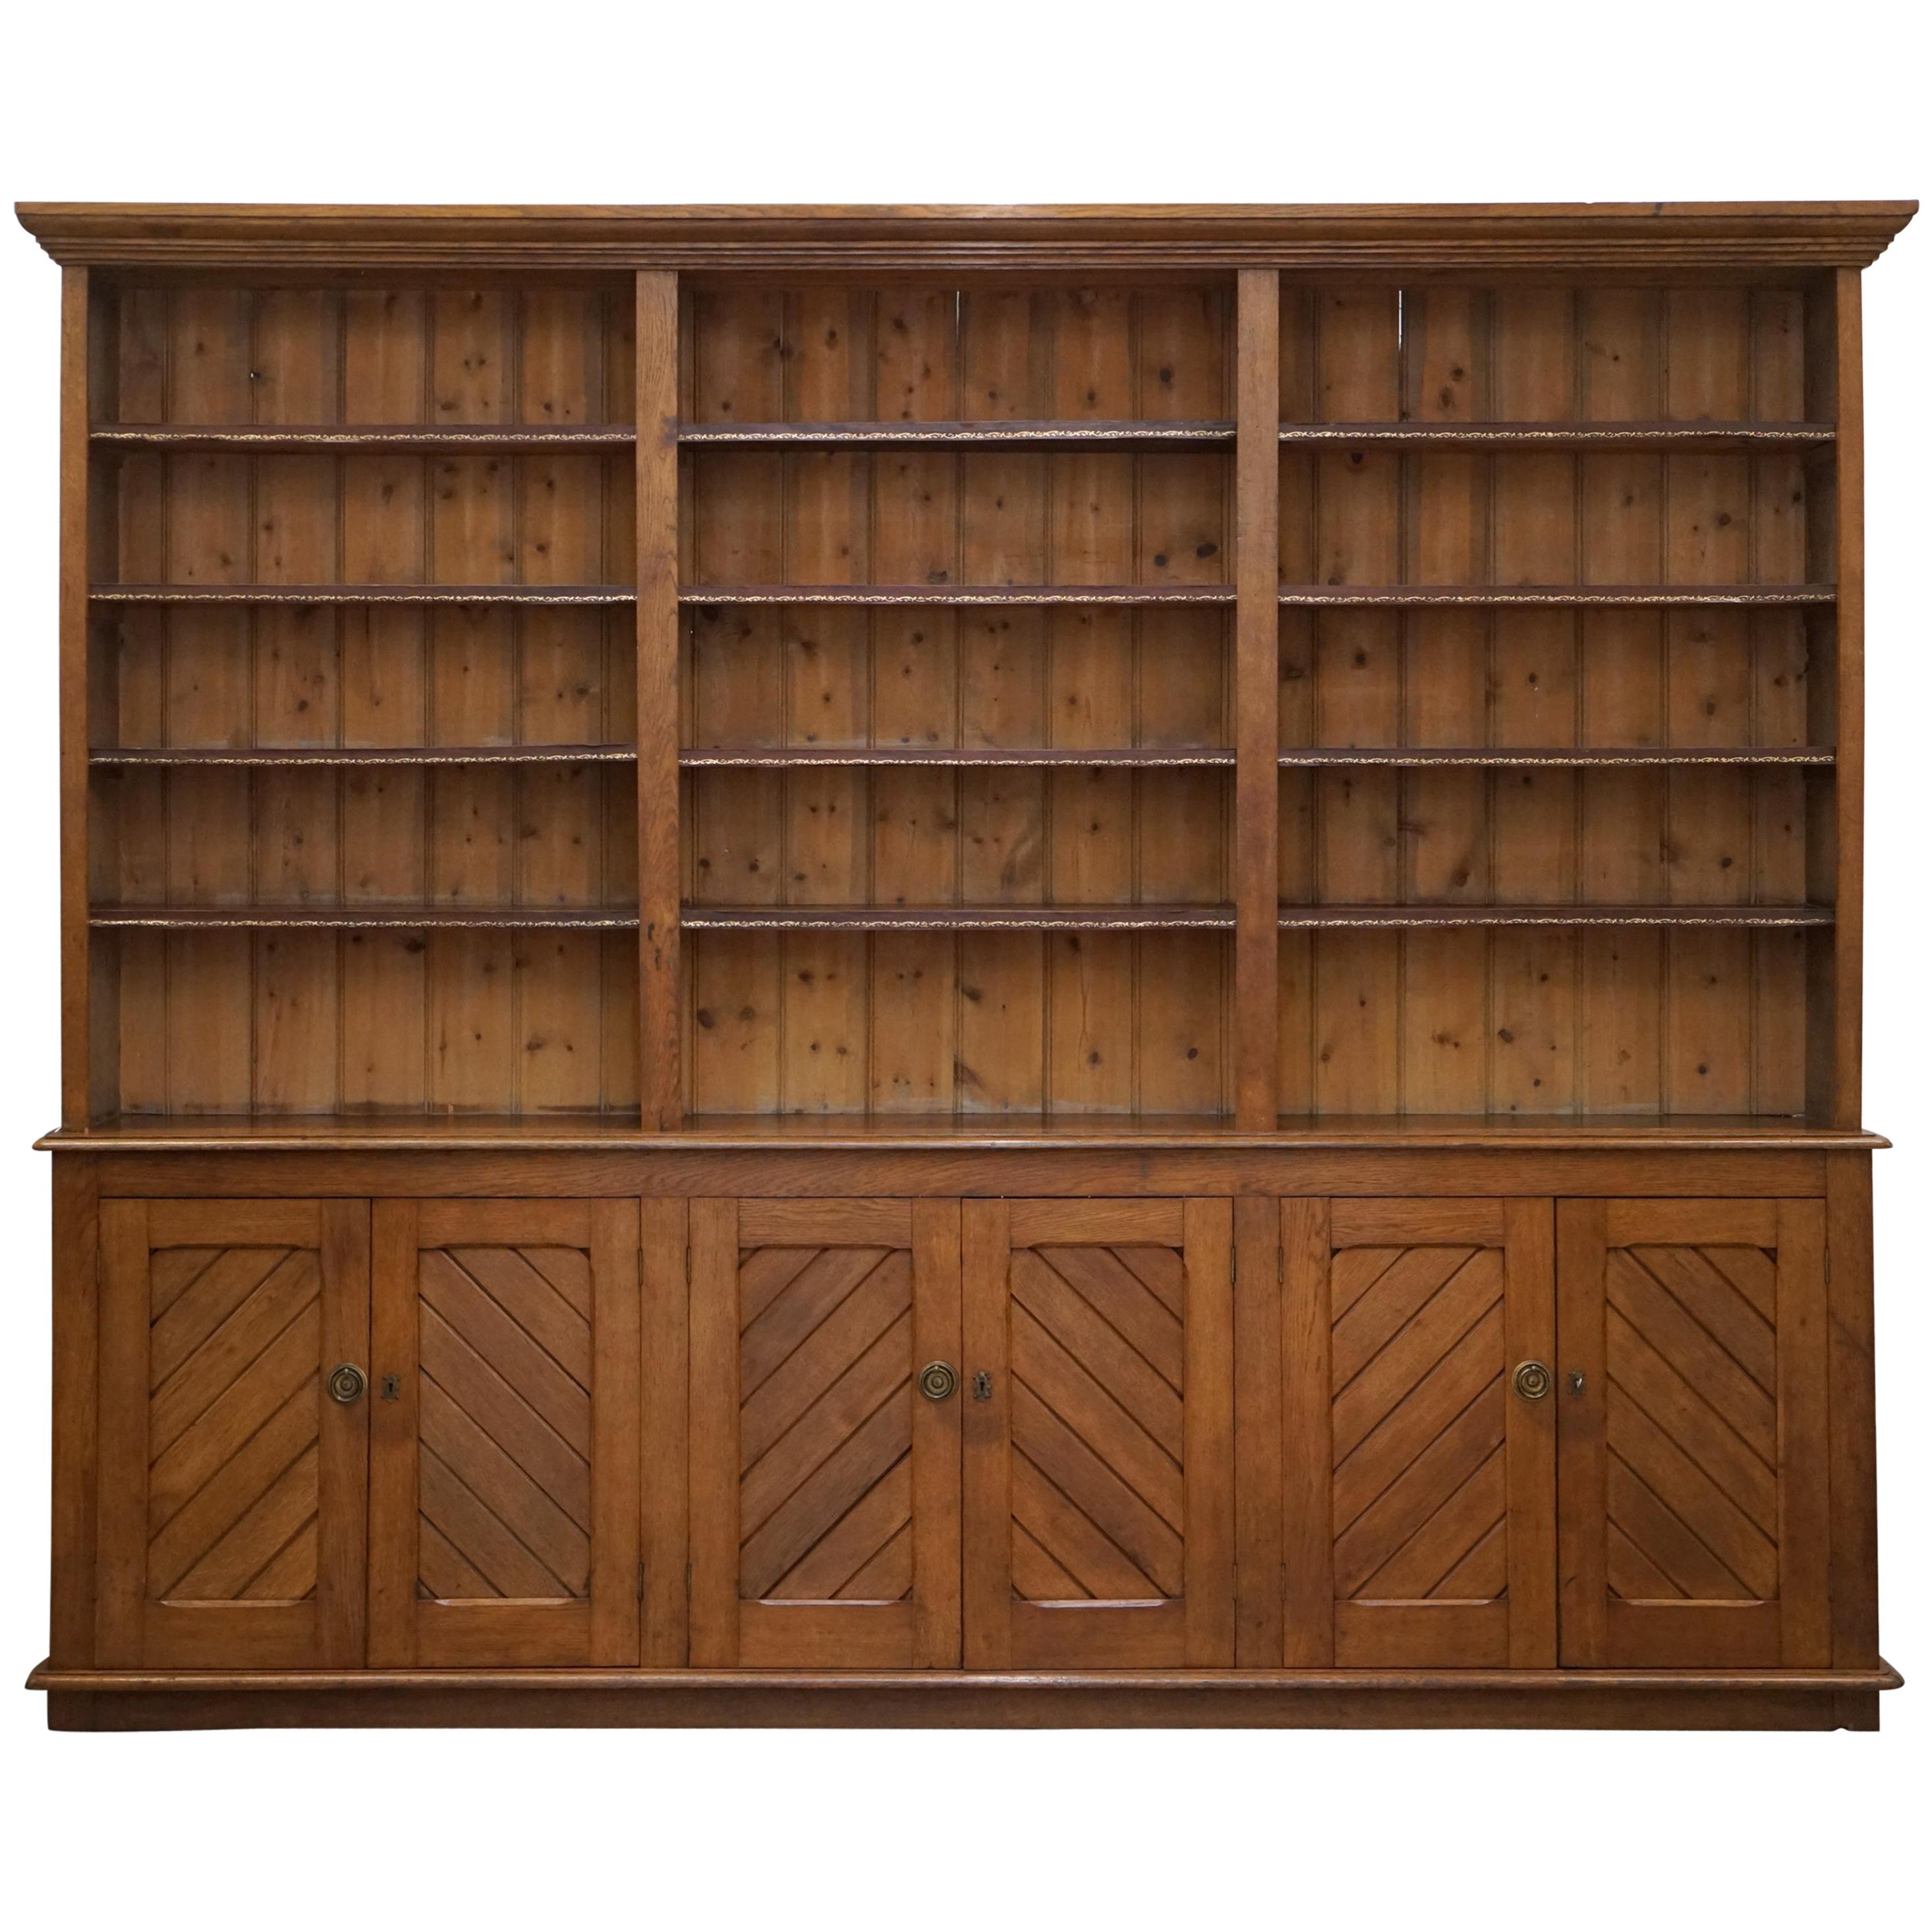 Solid English Oak Library Bookcase Gothic Pugin Style, circa 1840